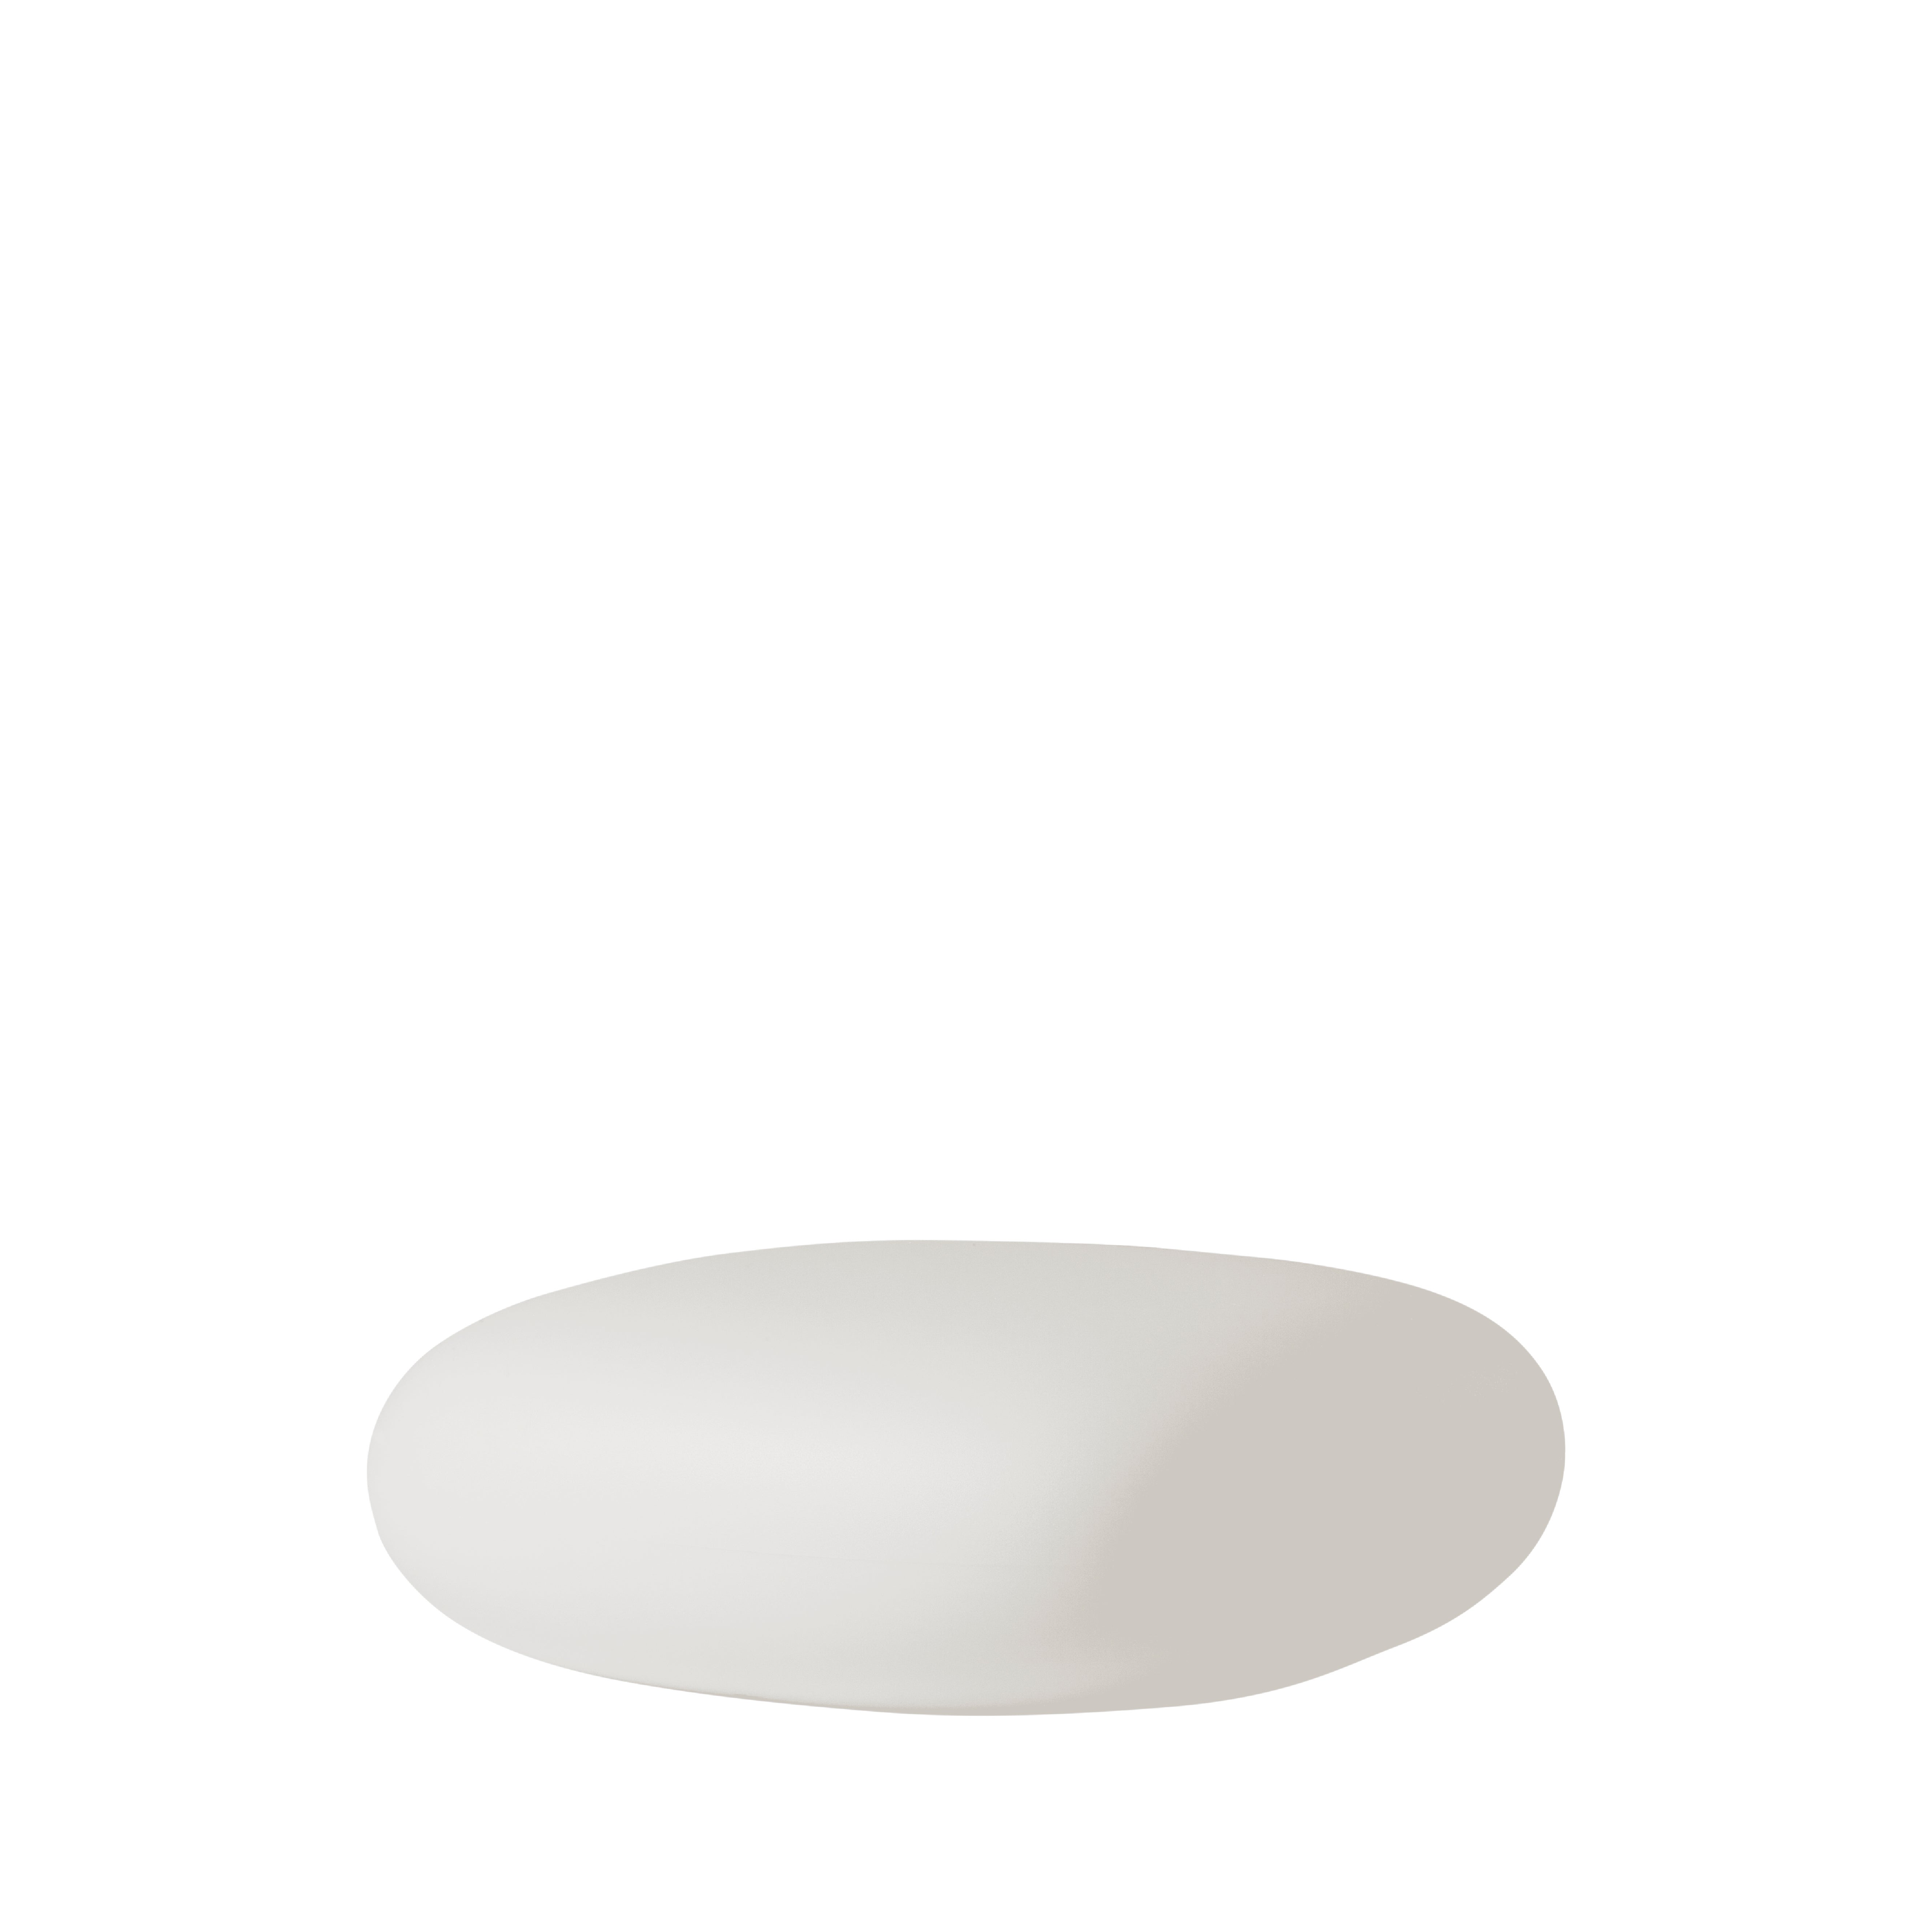 Chubby Low Pouf in Milky White im Slide-Design von Marcel Wanders